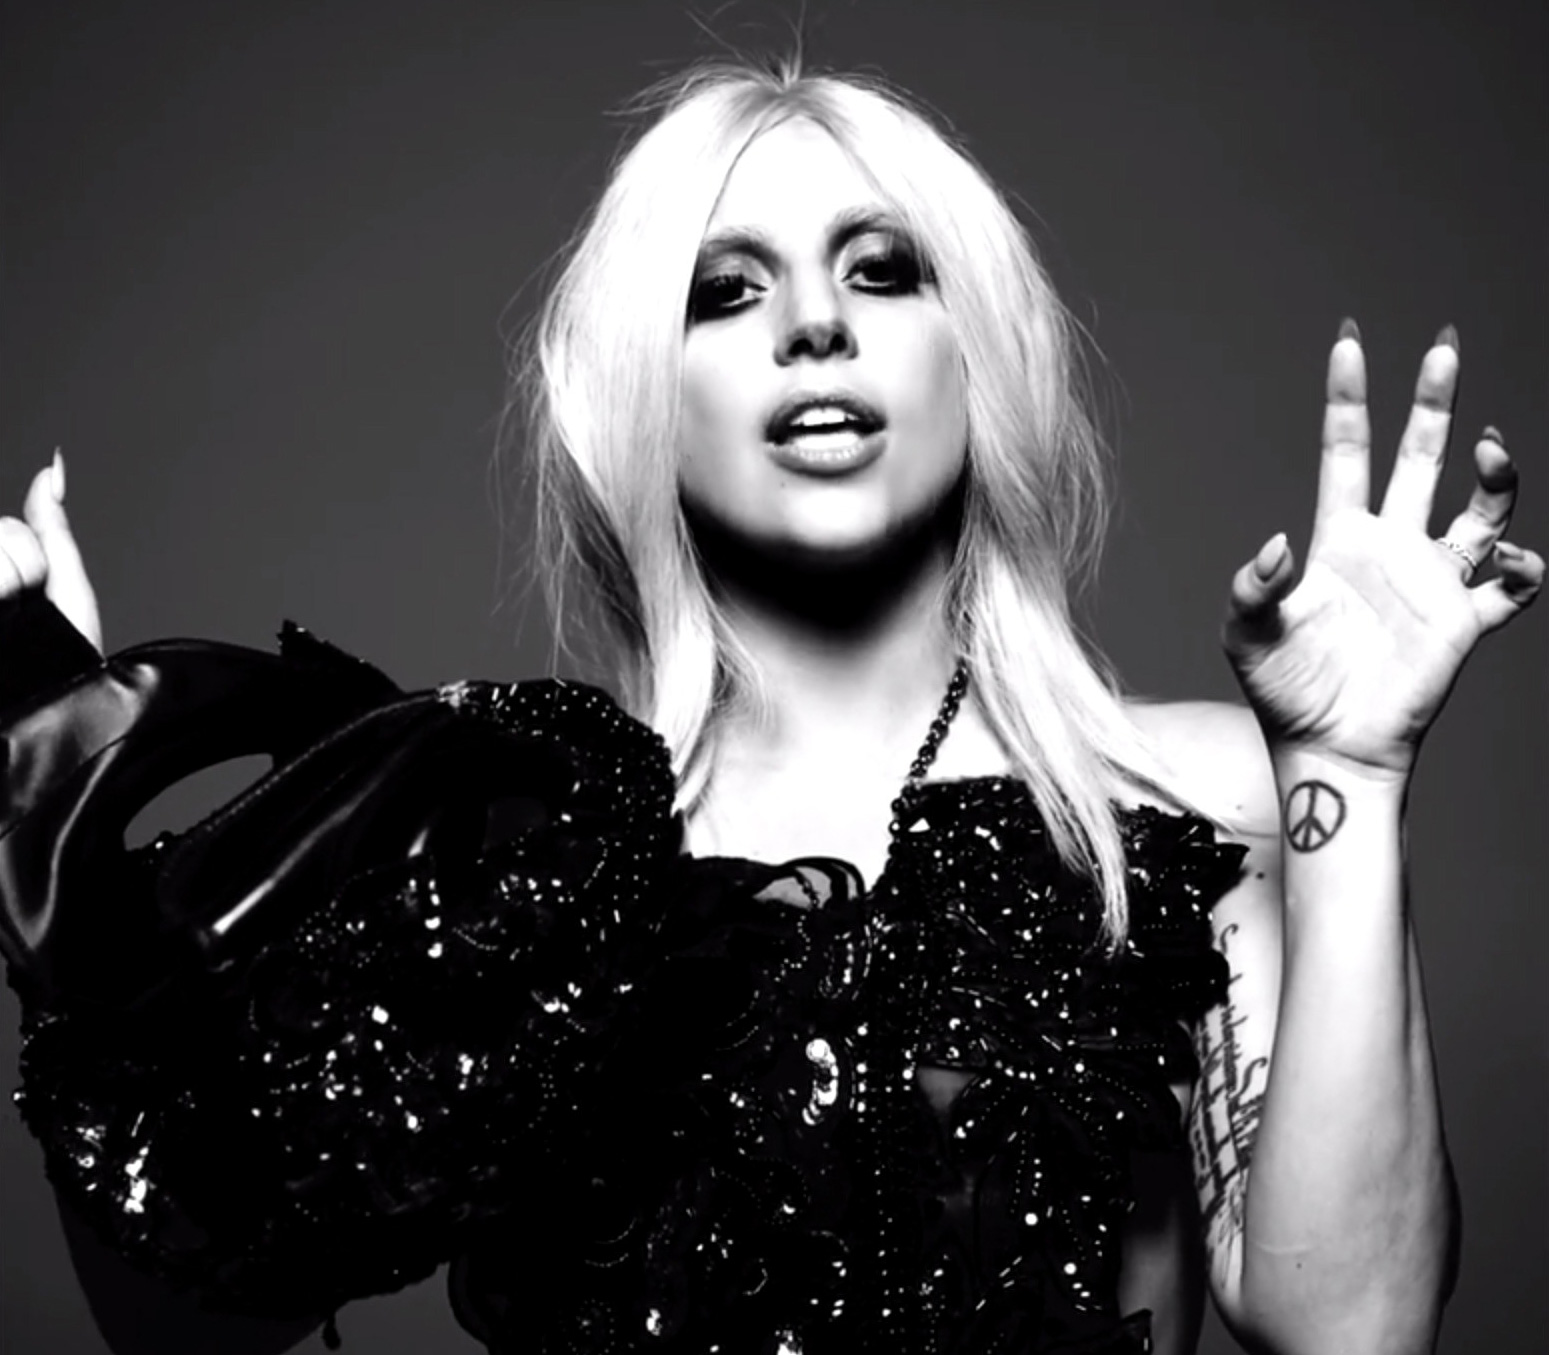 American Horror Story: Hotel: Lady Gaga in new teaser video